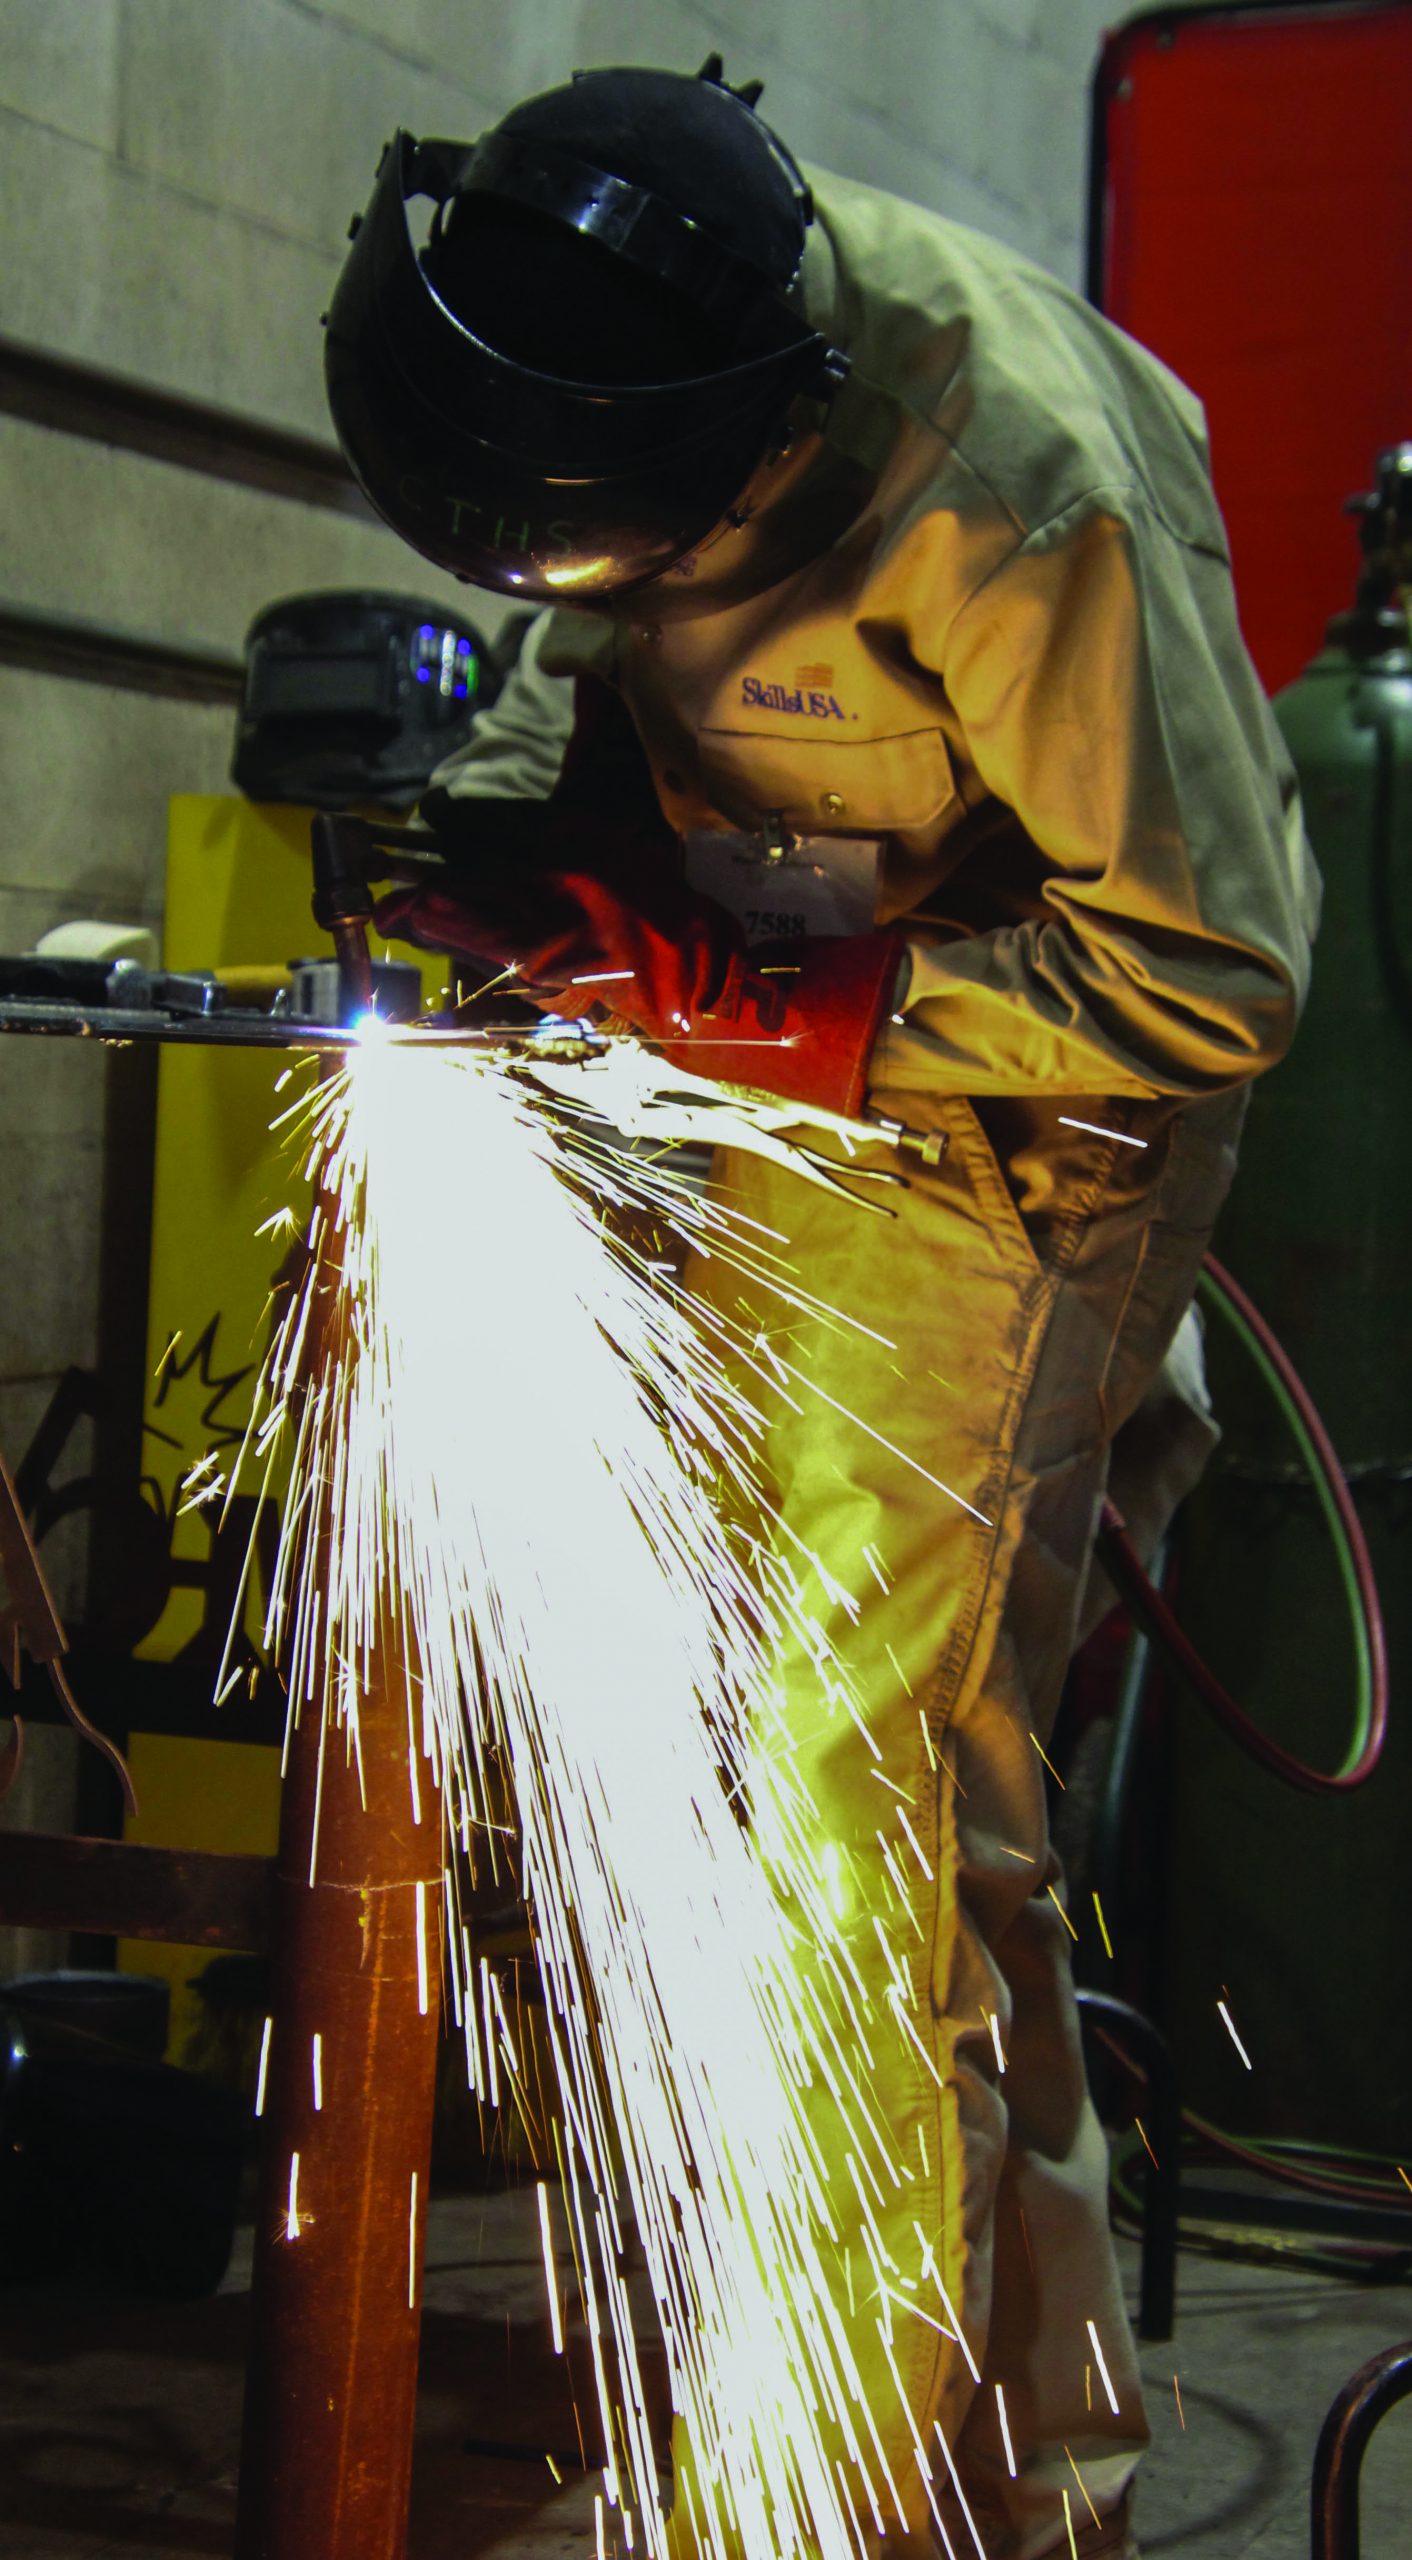 DMC welding competition deadline on Oct 27